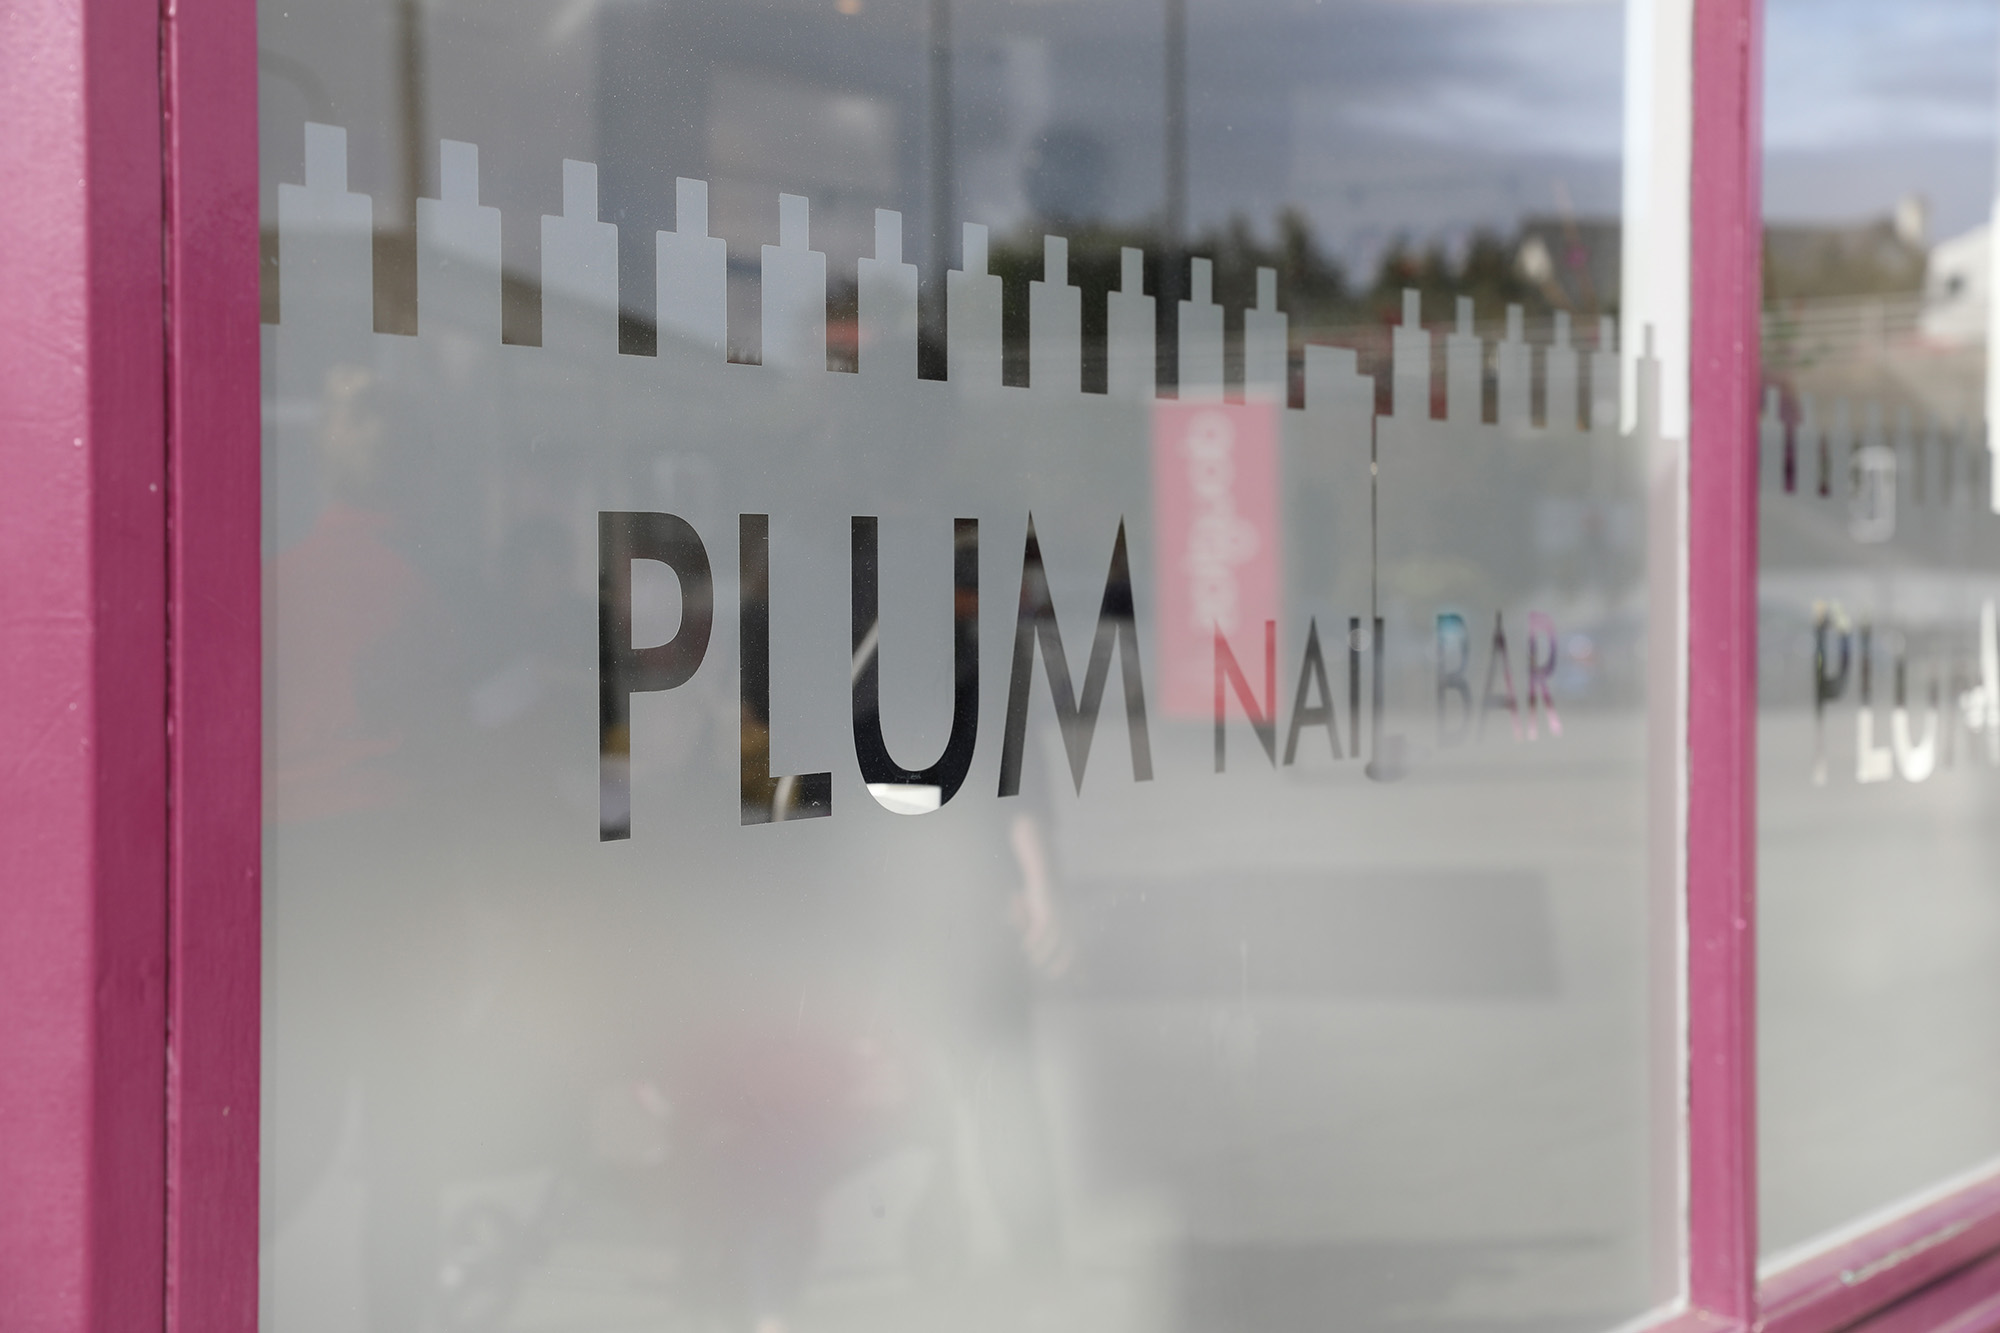 Plum Nail Bar window